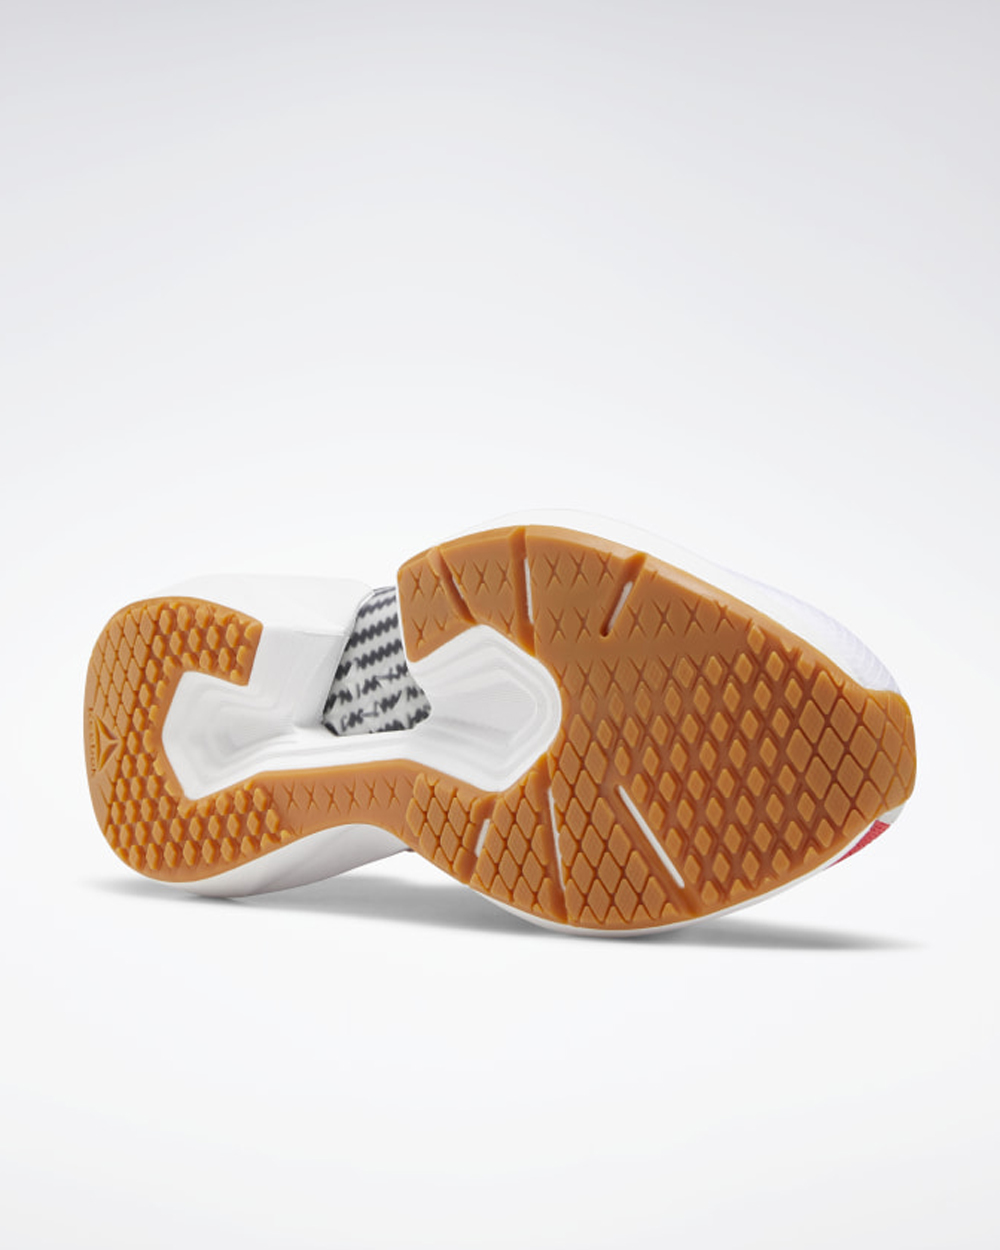 Reebok Sole Fury R58 3D Printed Shoes